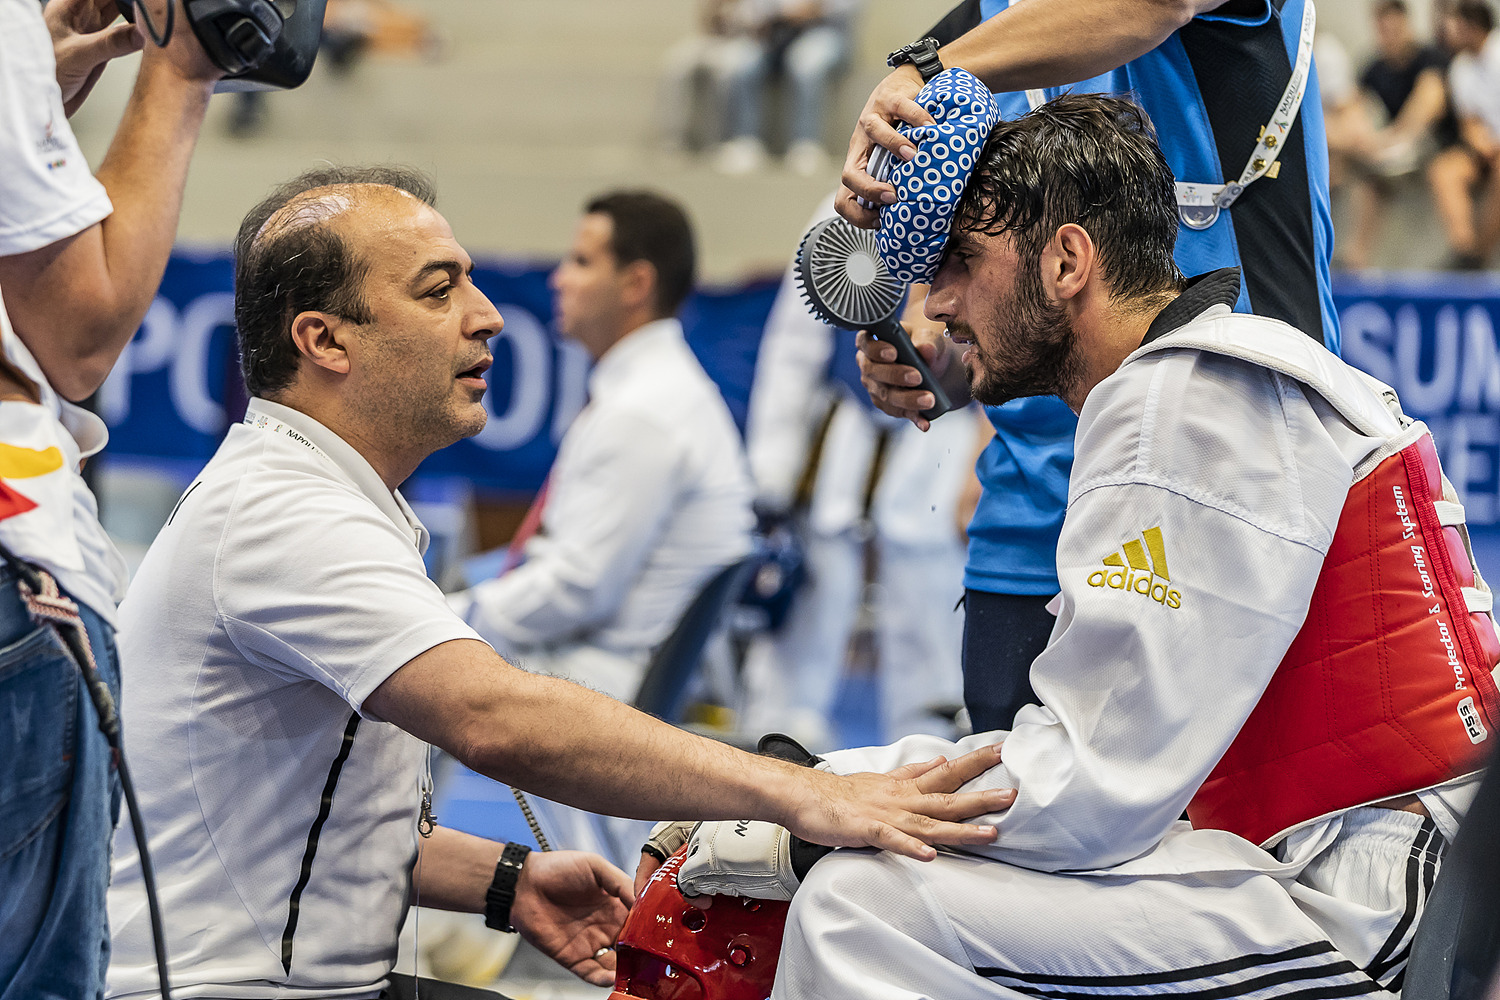 Ahmadi Soroush 12 luglio 2019 - Fotografi Universiade - Taekwondo Foto Antonello Naddeo 4